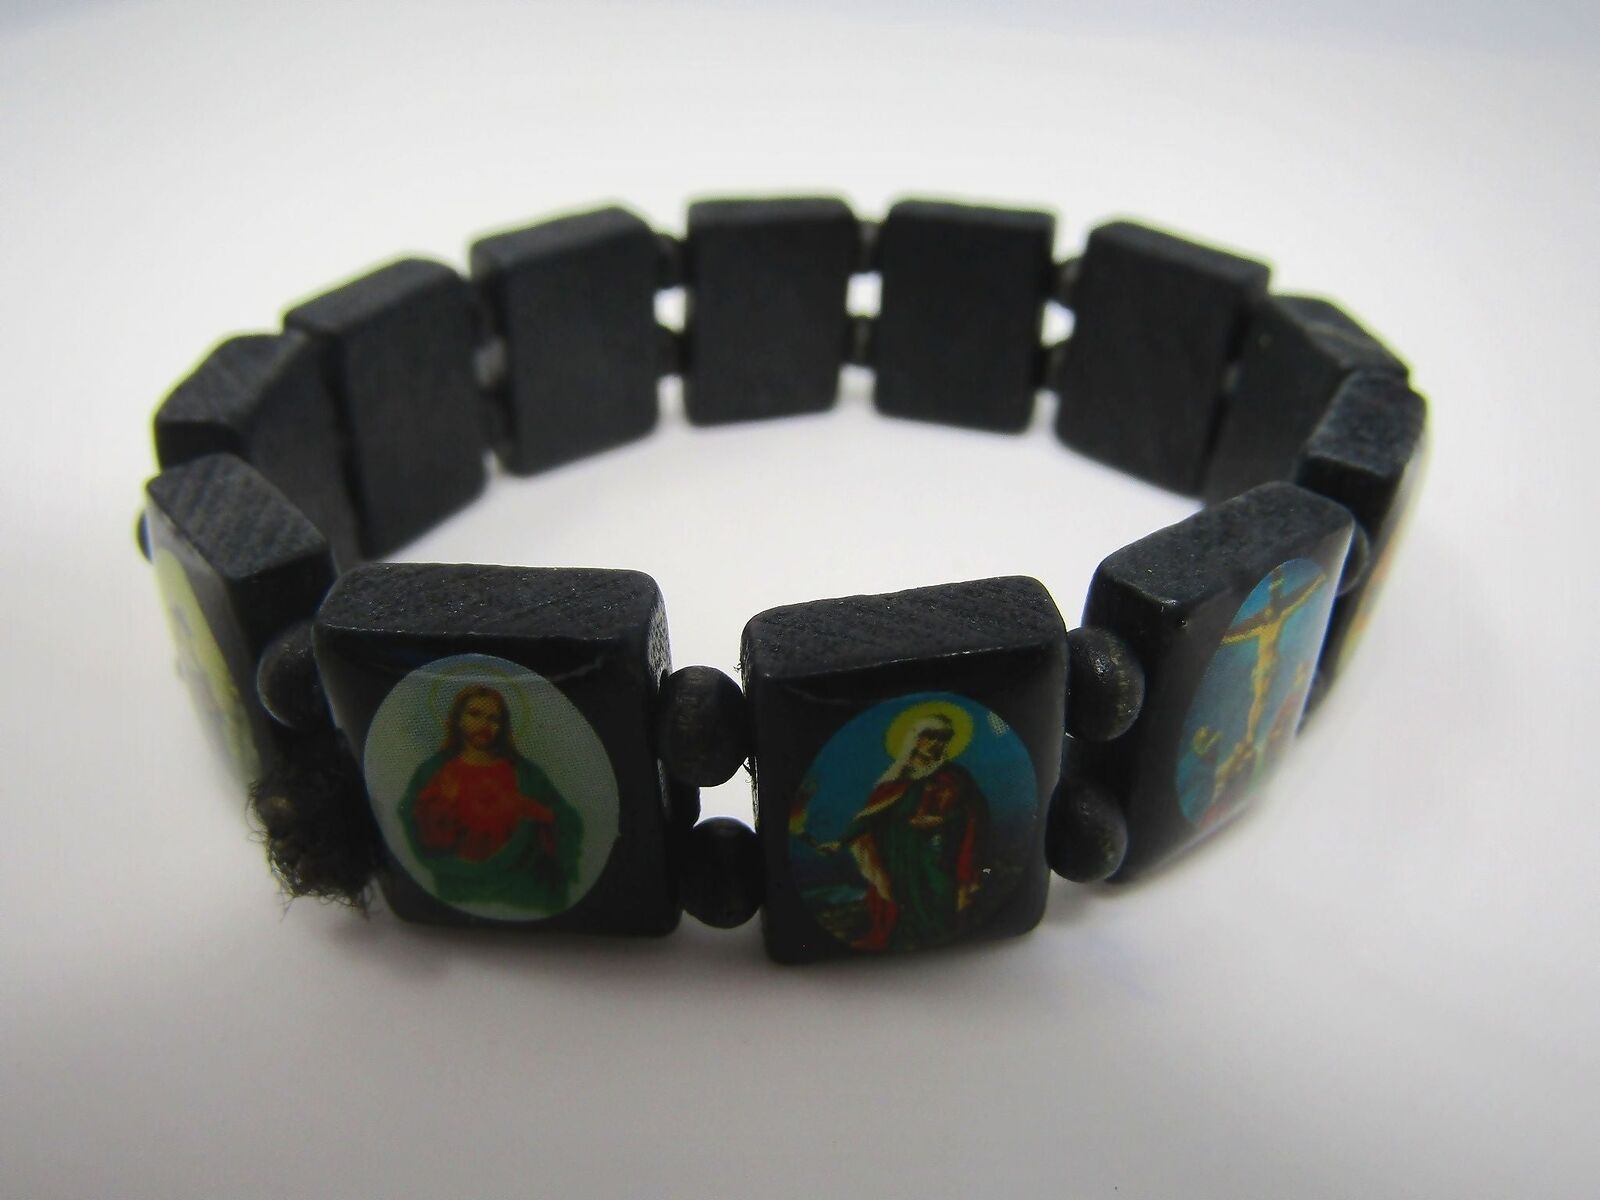 Vintage Christian Bracelet Jewelry: Religious Themes Wood Angel Jesus